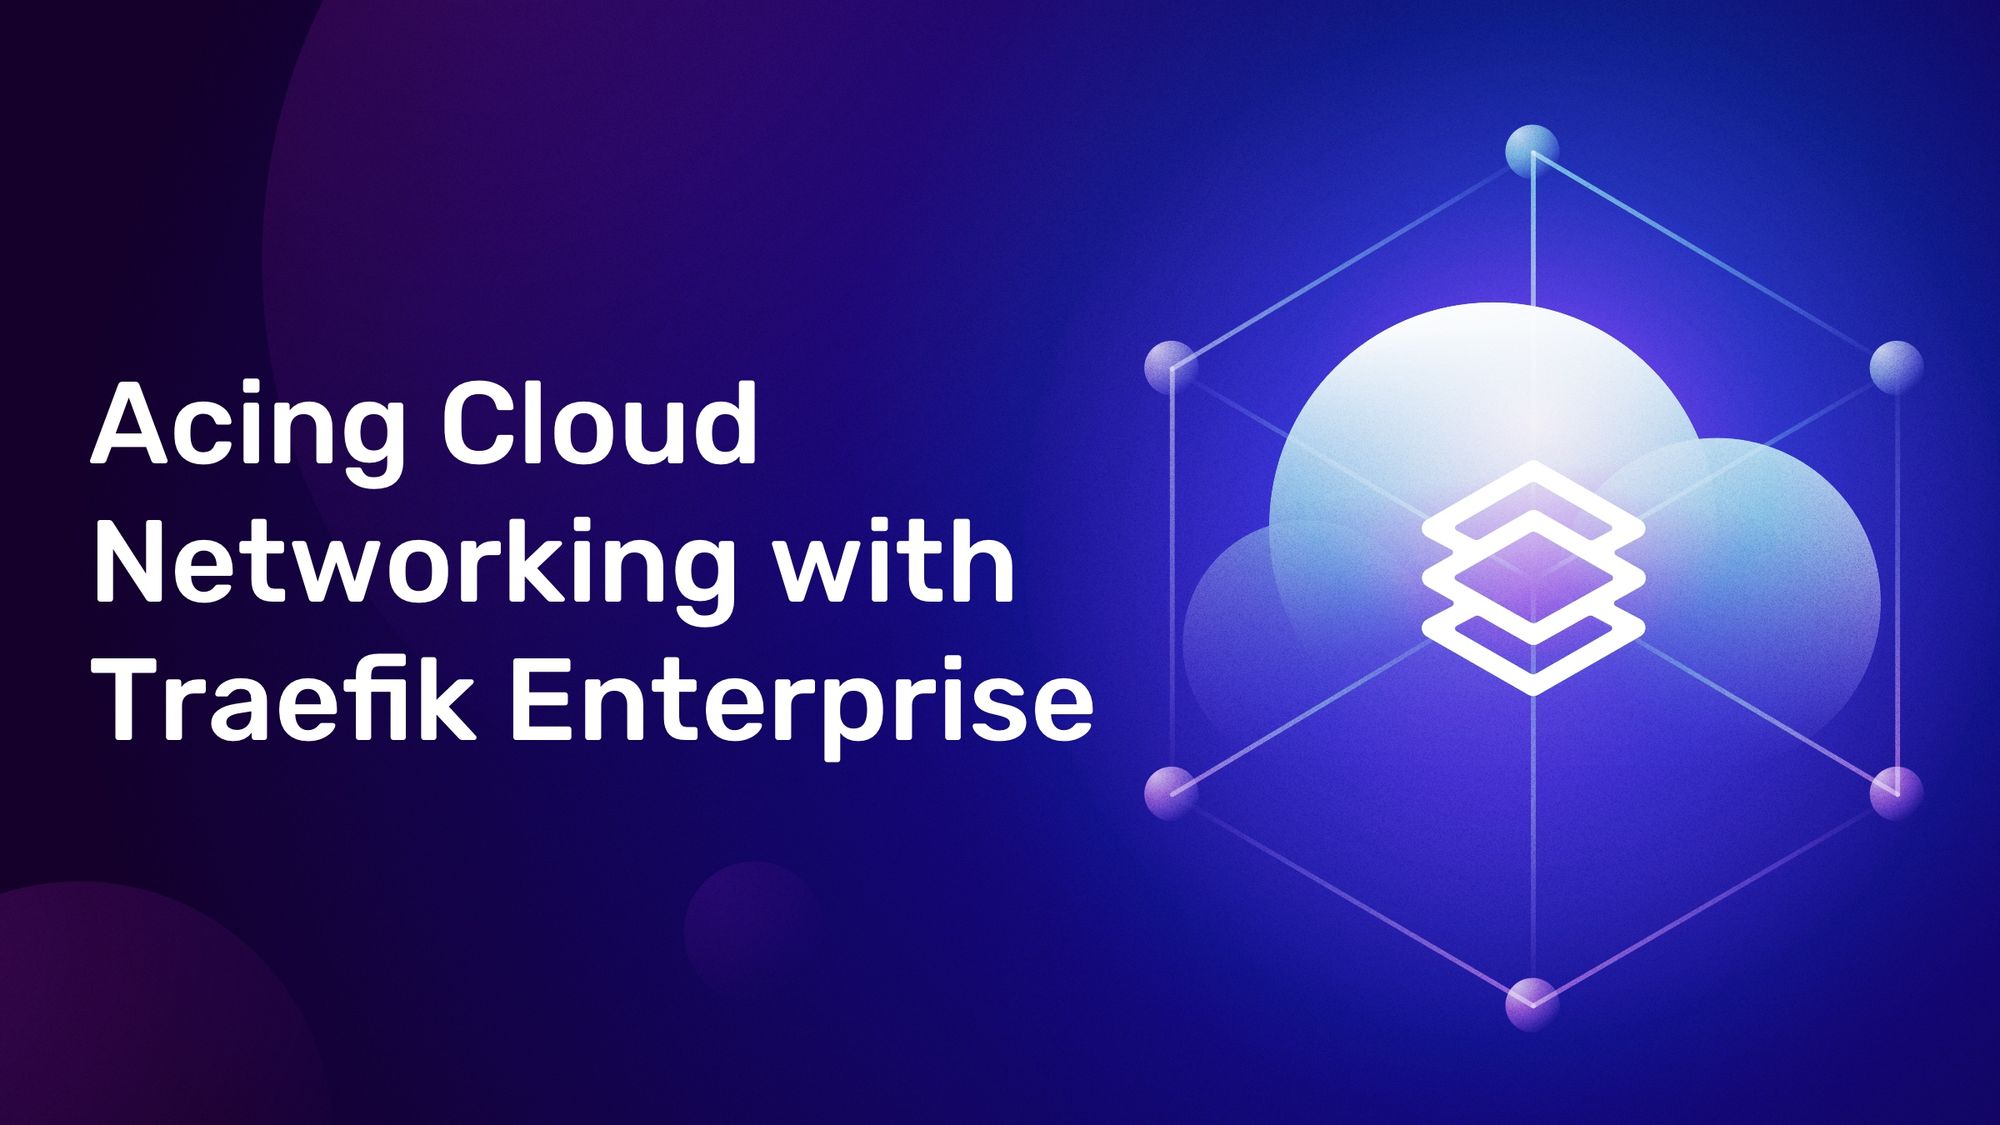 cloud networking with traefik enterprise